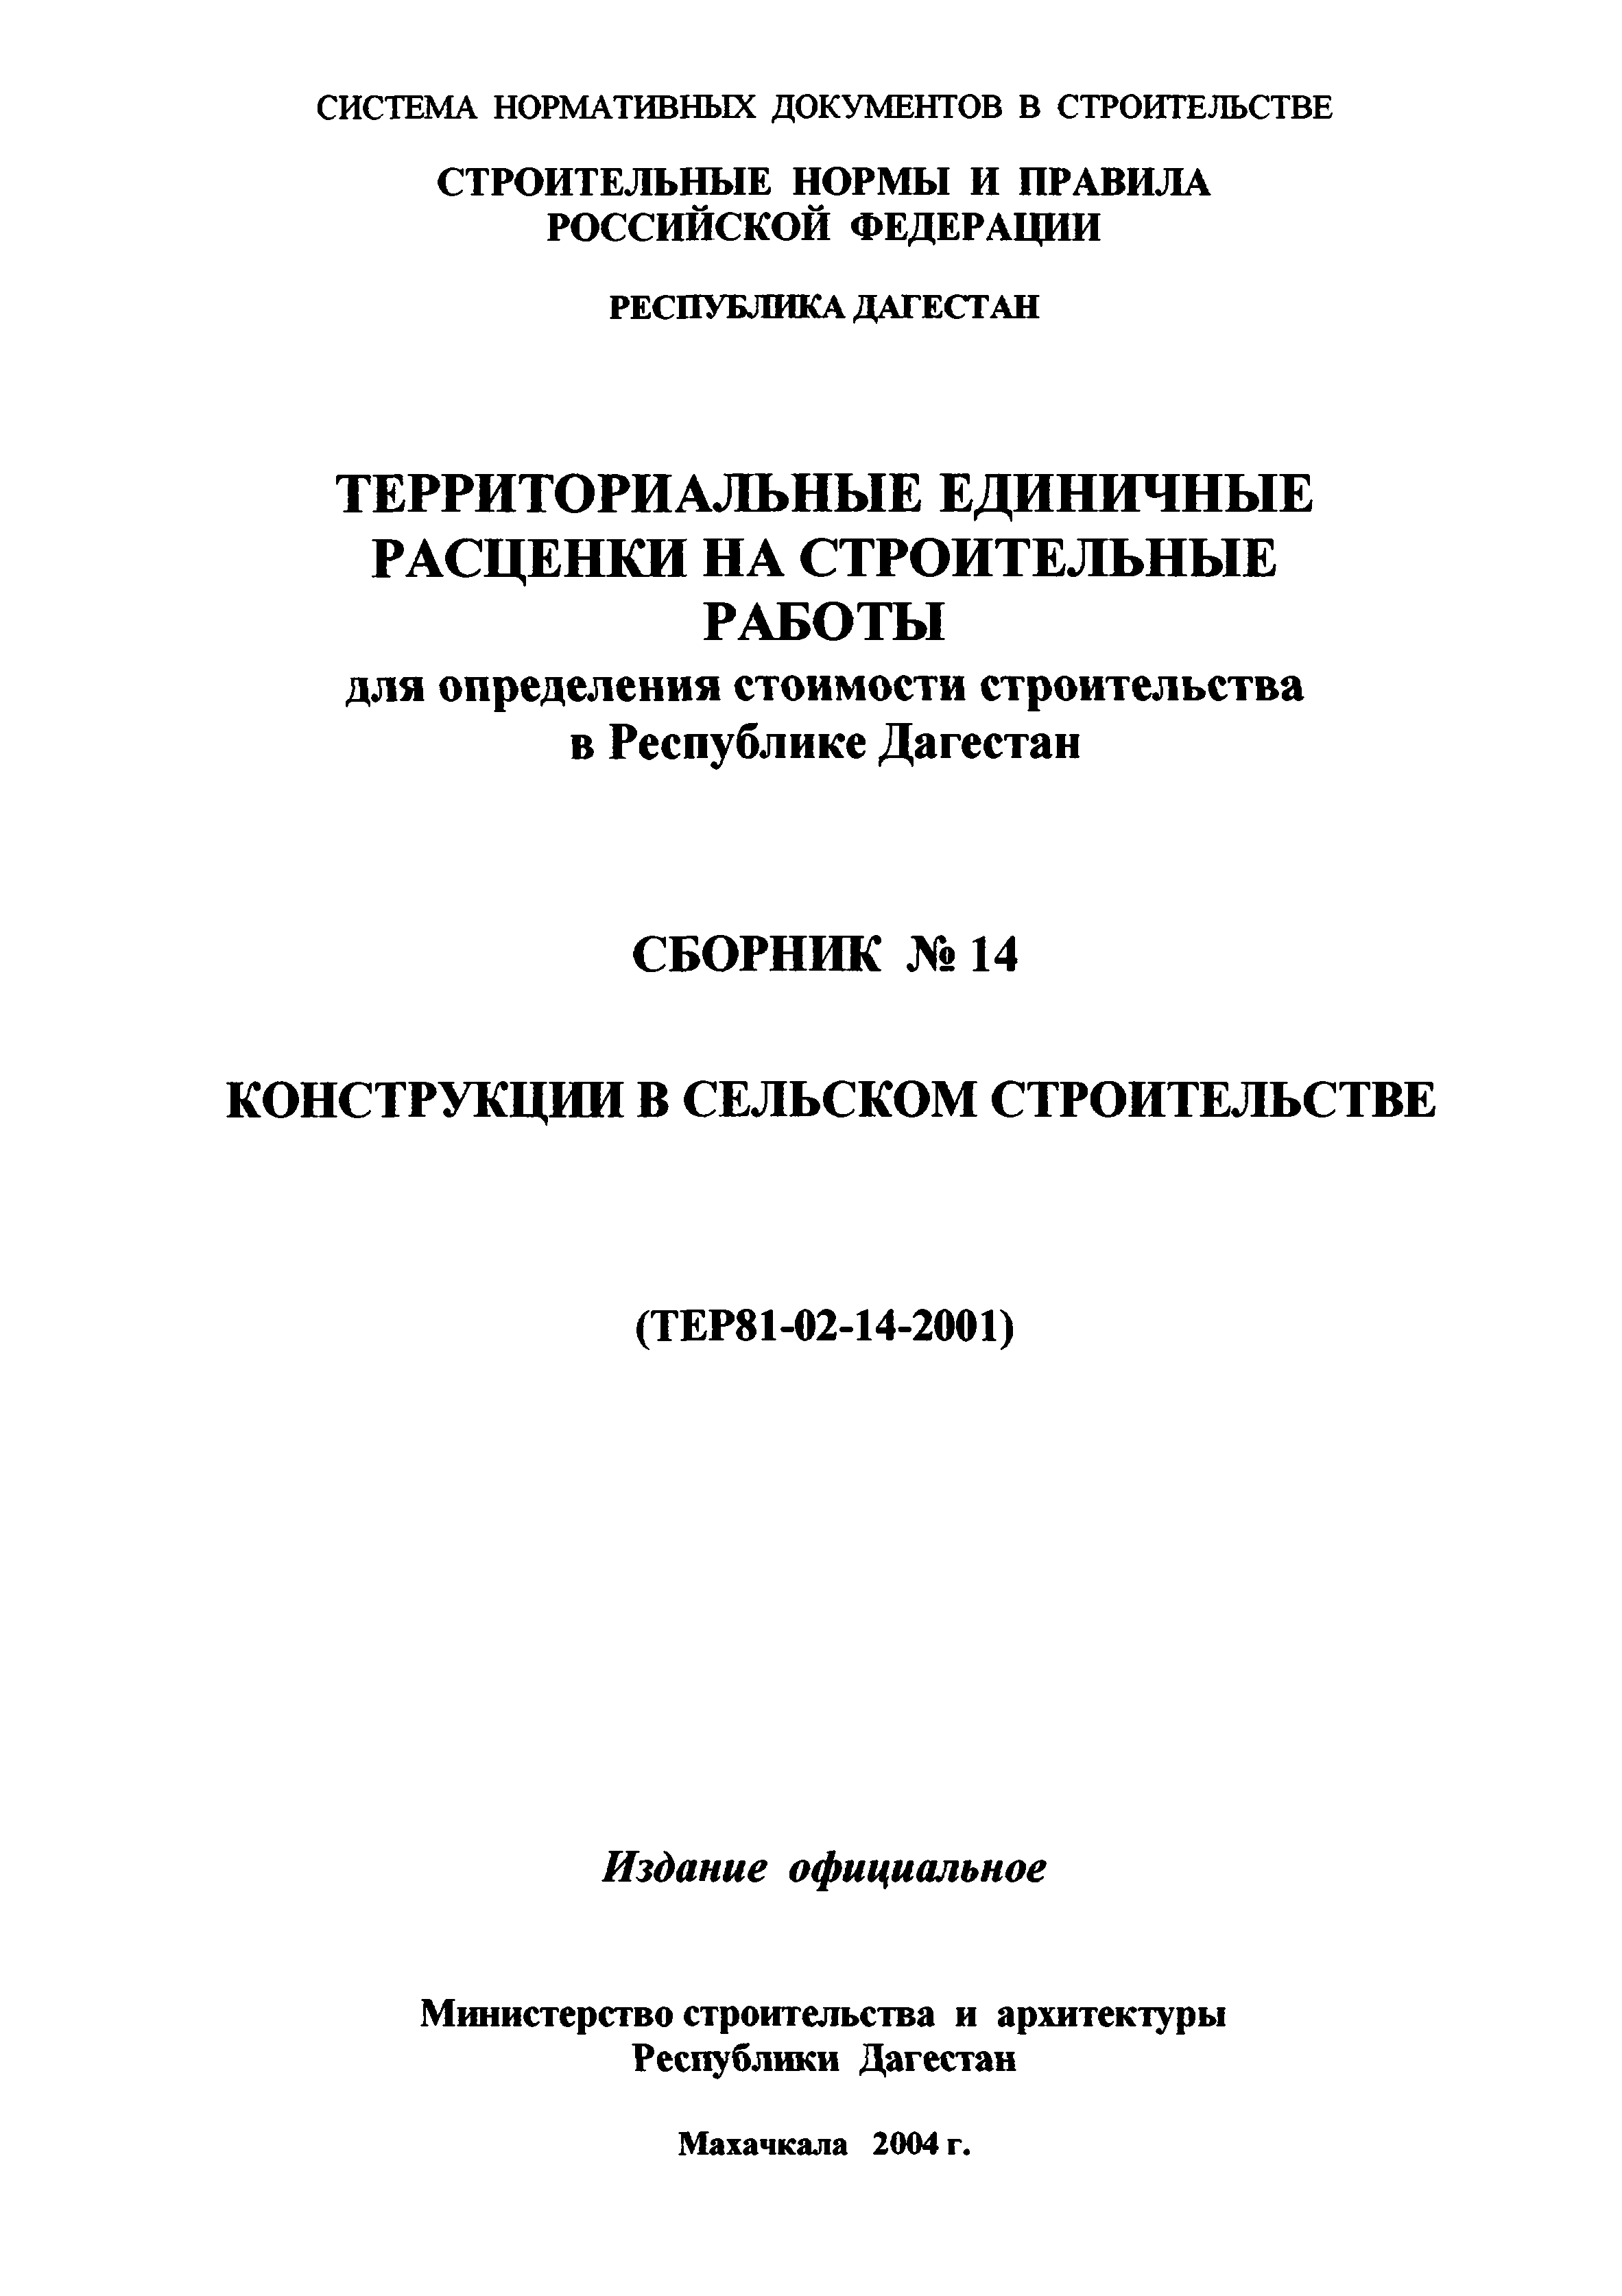 ТЕР Республика Дагестан 2001-14